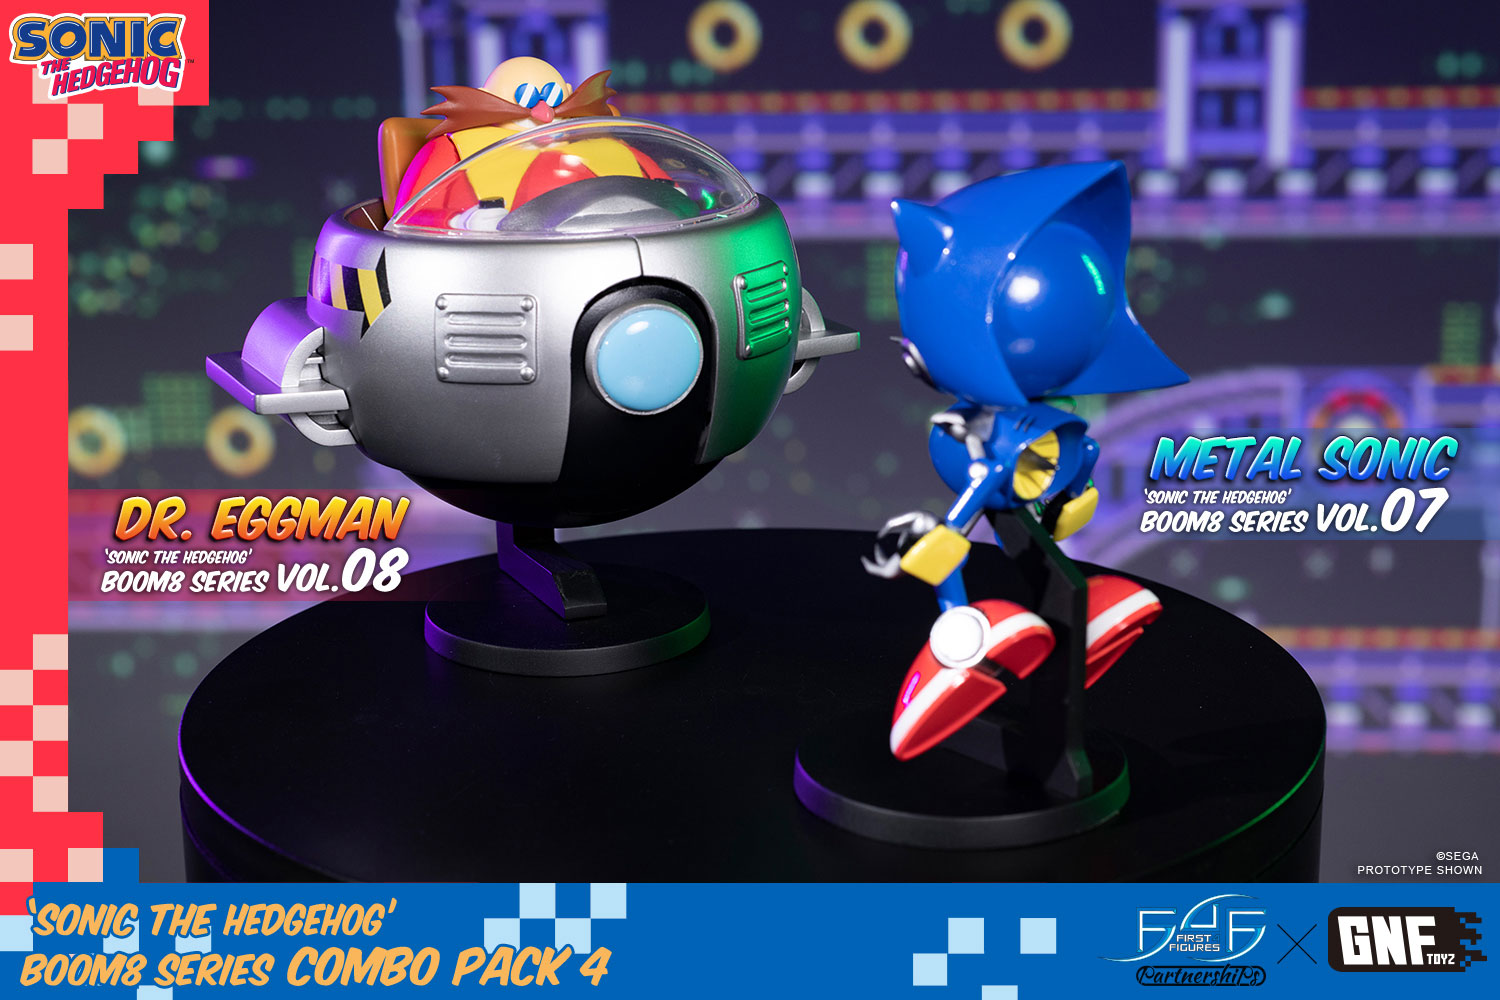 Sonic the Hedgehog Figura 4'' - Metal Sonic